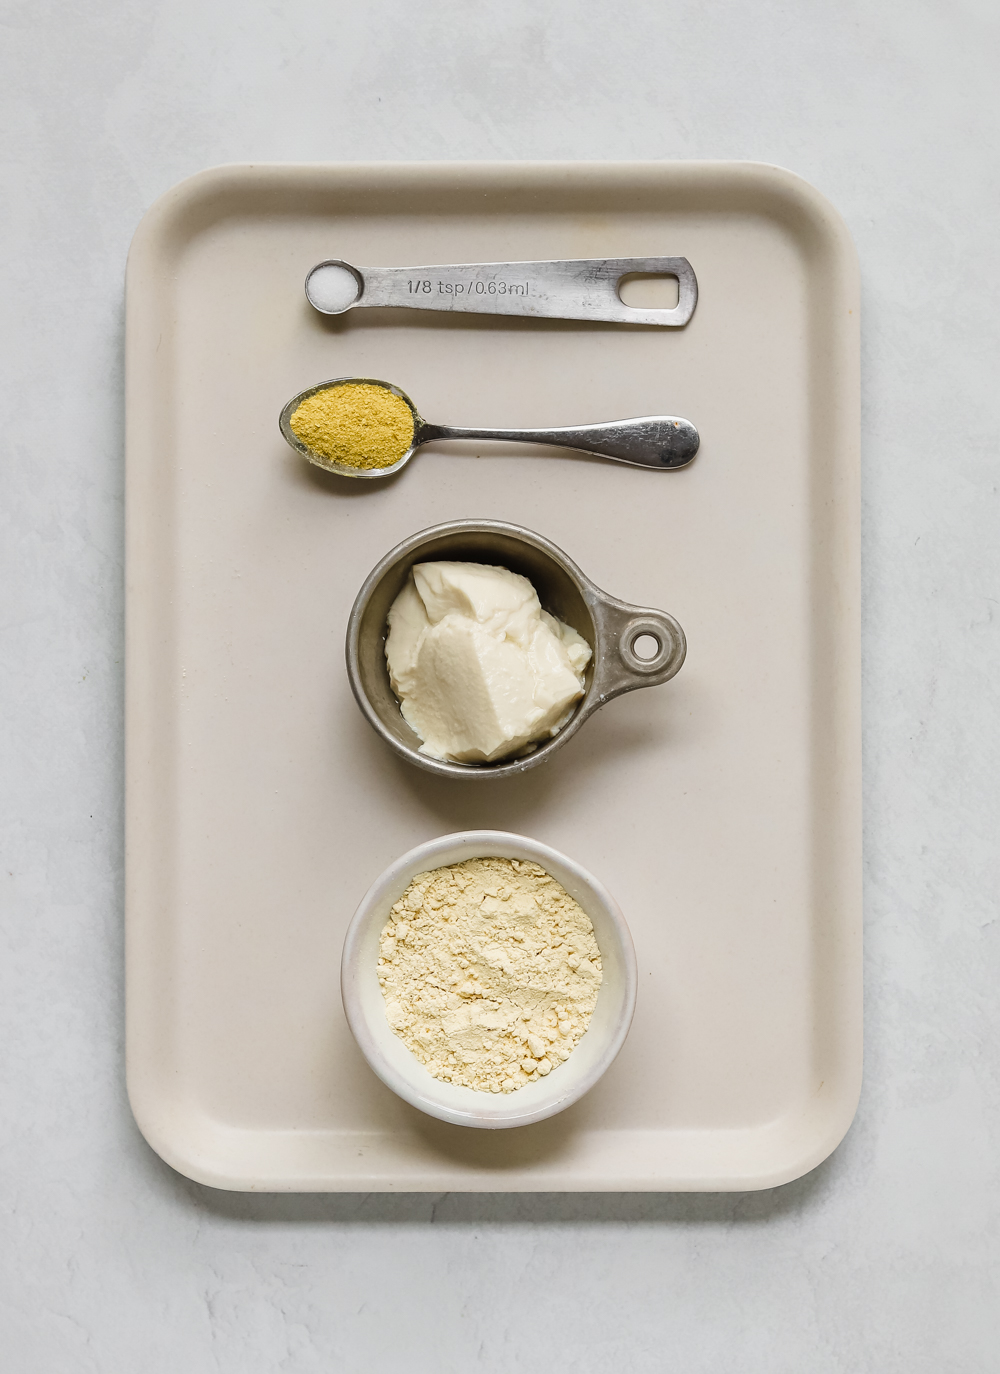 Ingredients to make vegan eggs: chickpea flour, silken tofu, nutritional yeast, and salt. 